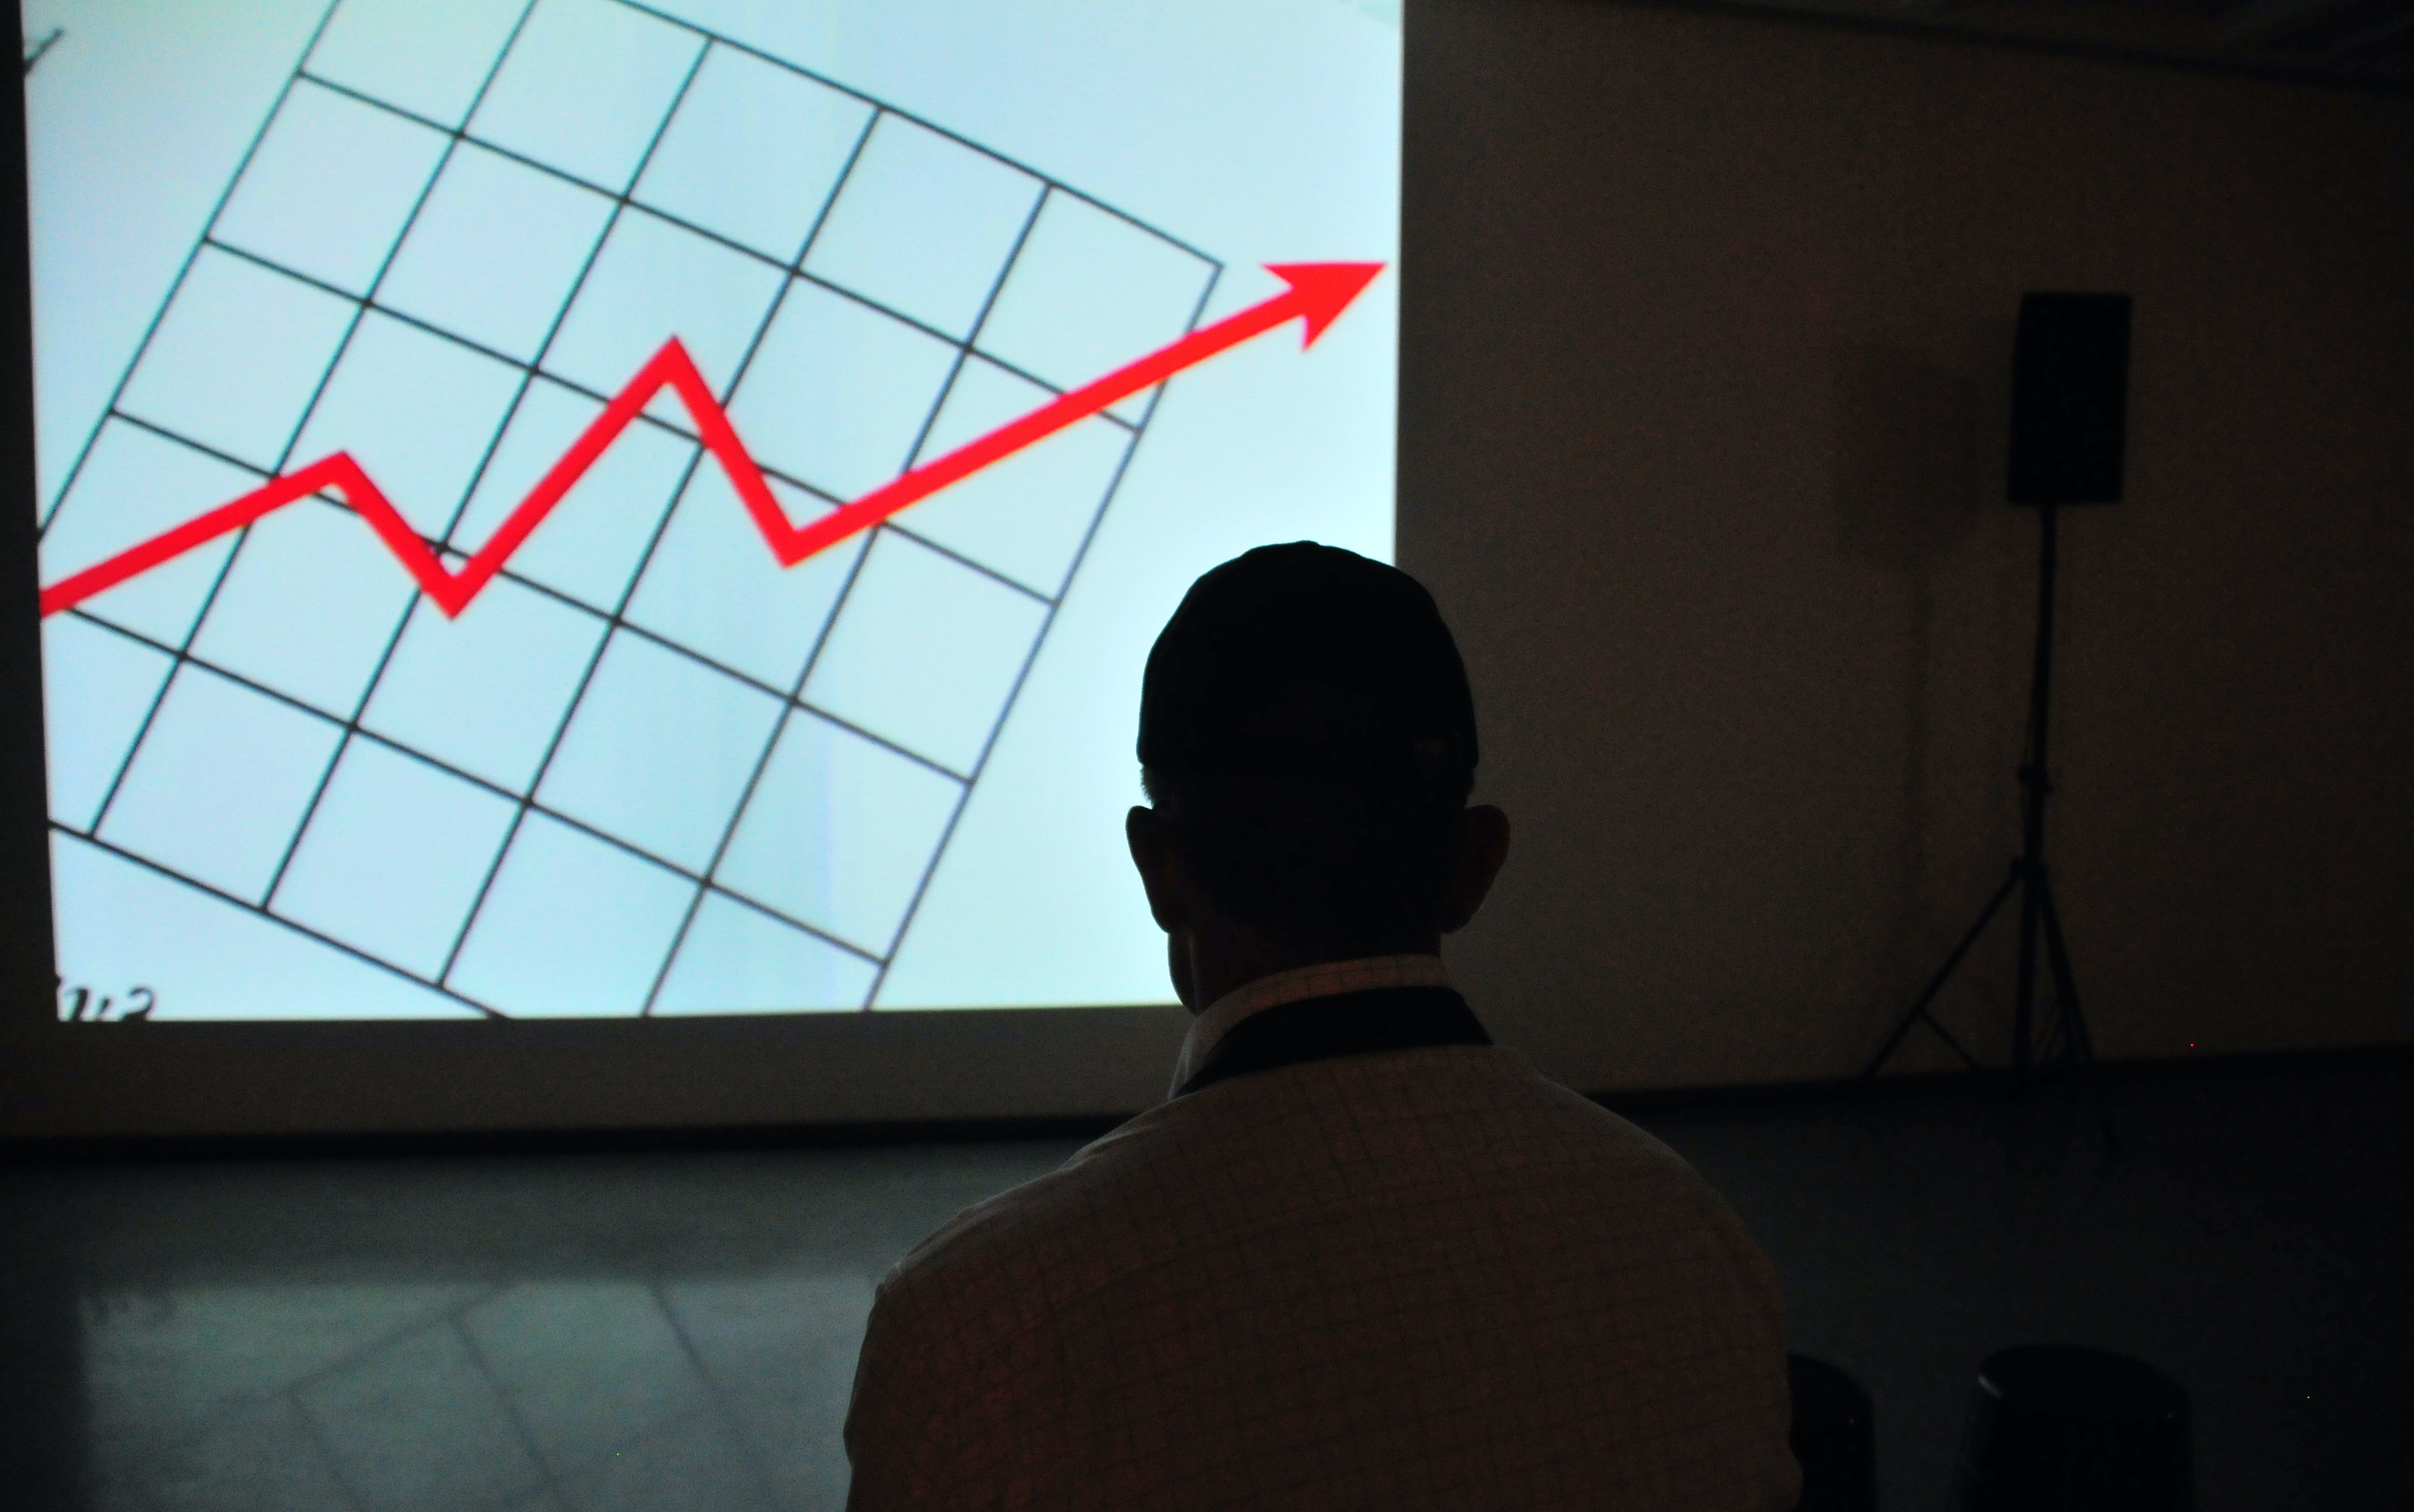 Photo of a man looking at an upward trend graph